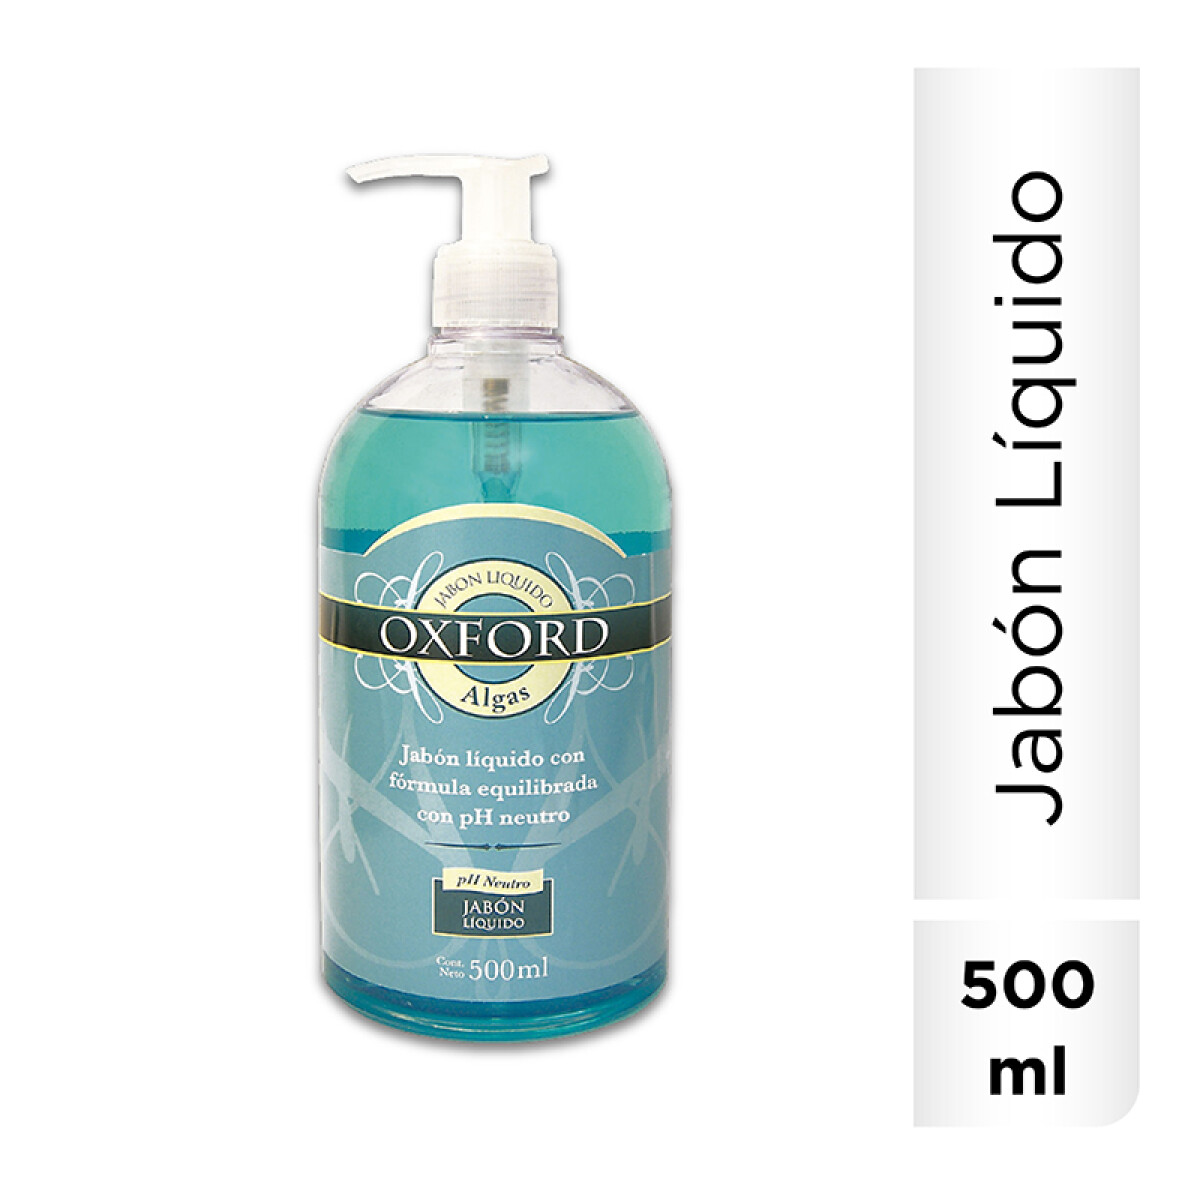 Oxford jabón líquido 500 ml - -Algas 